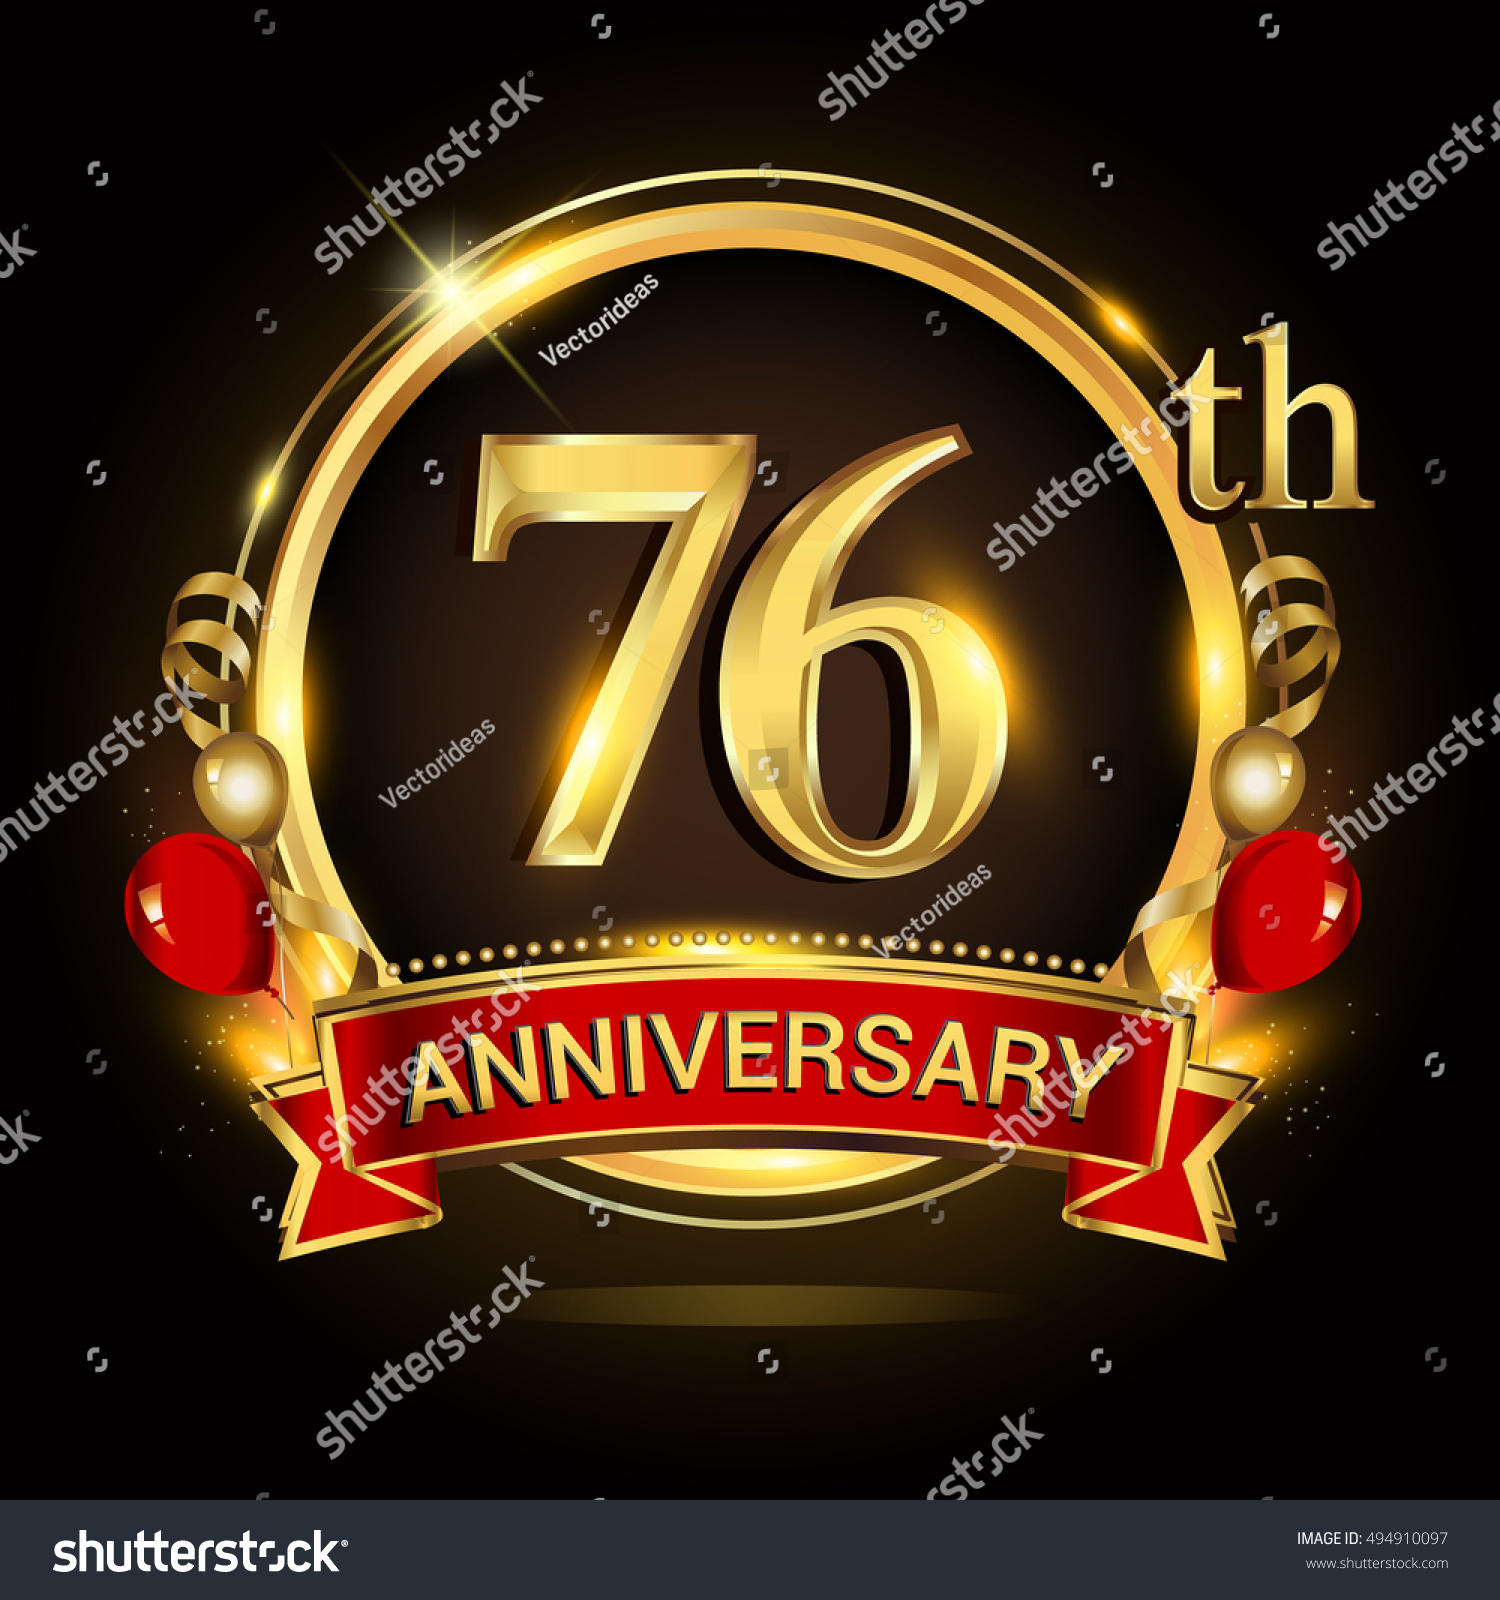 76th Anniversary Logo Golden Ringballoons Red Stock Vector Royalty Free 494910097 Shutterstock 5508